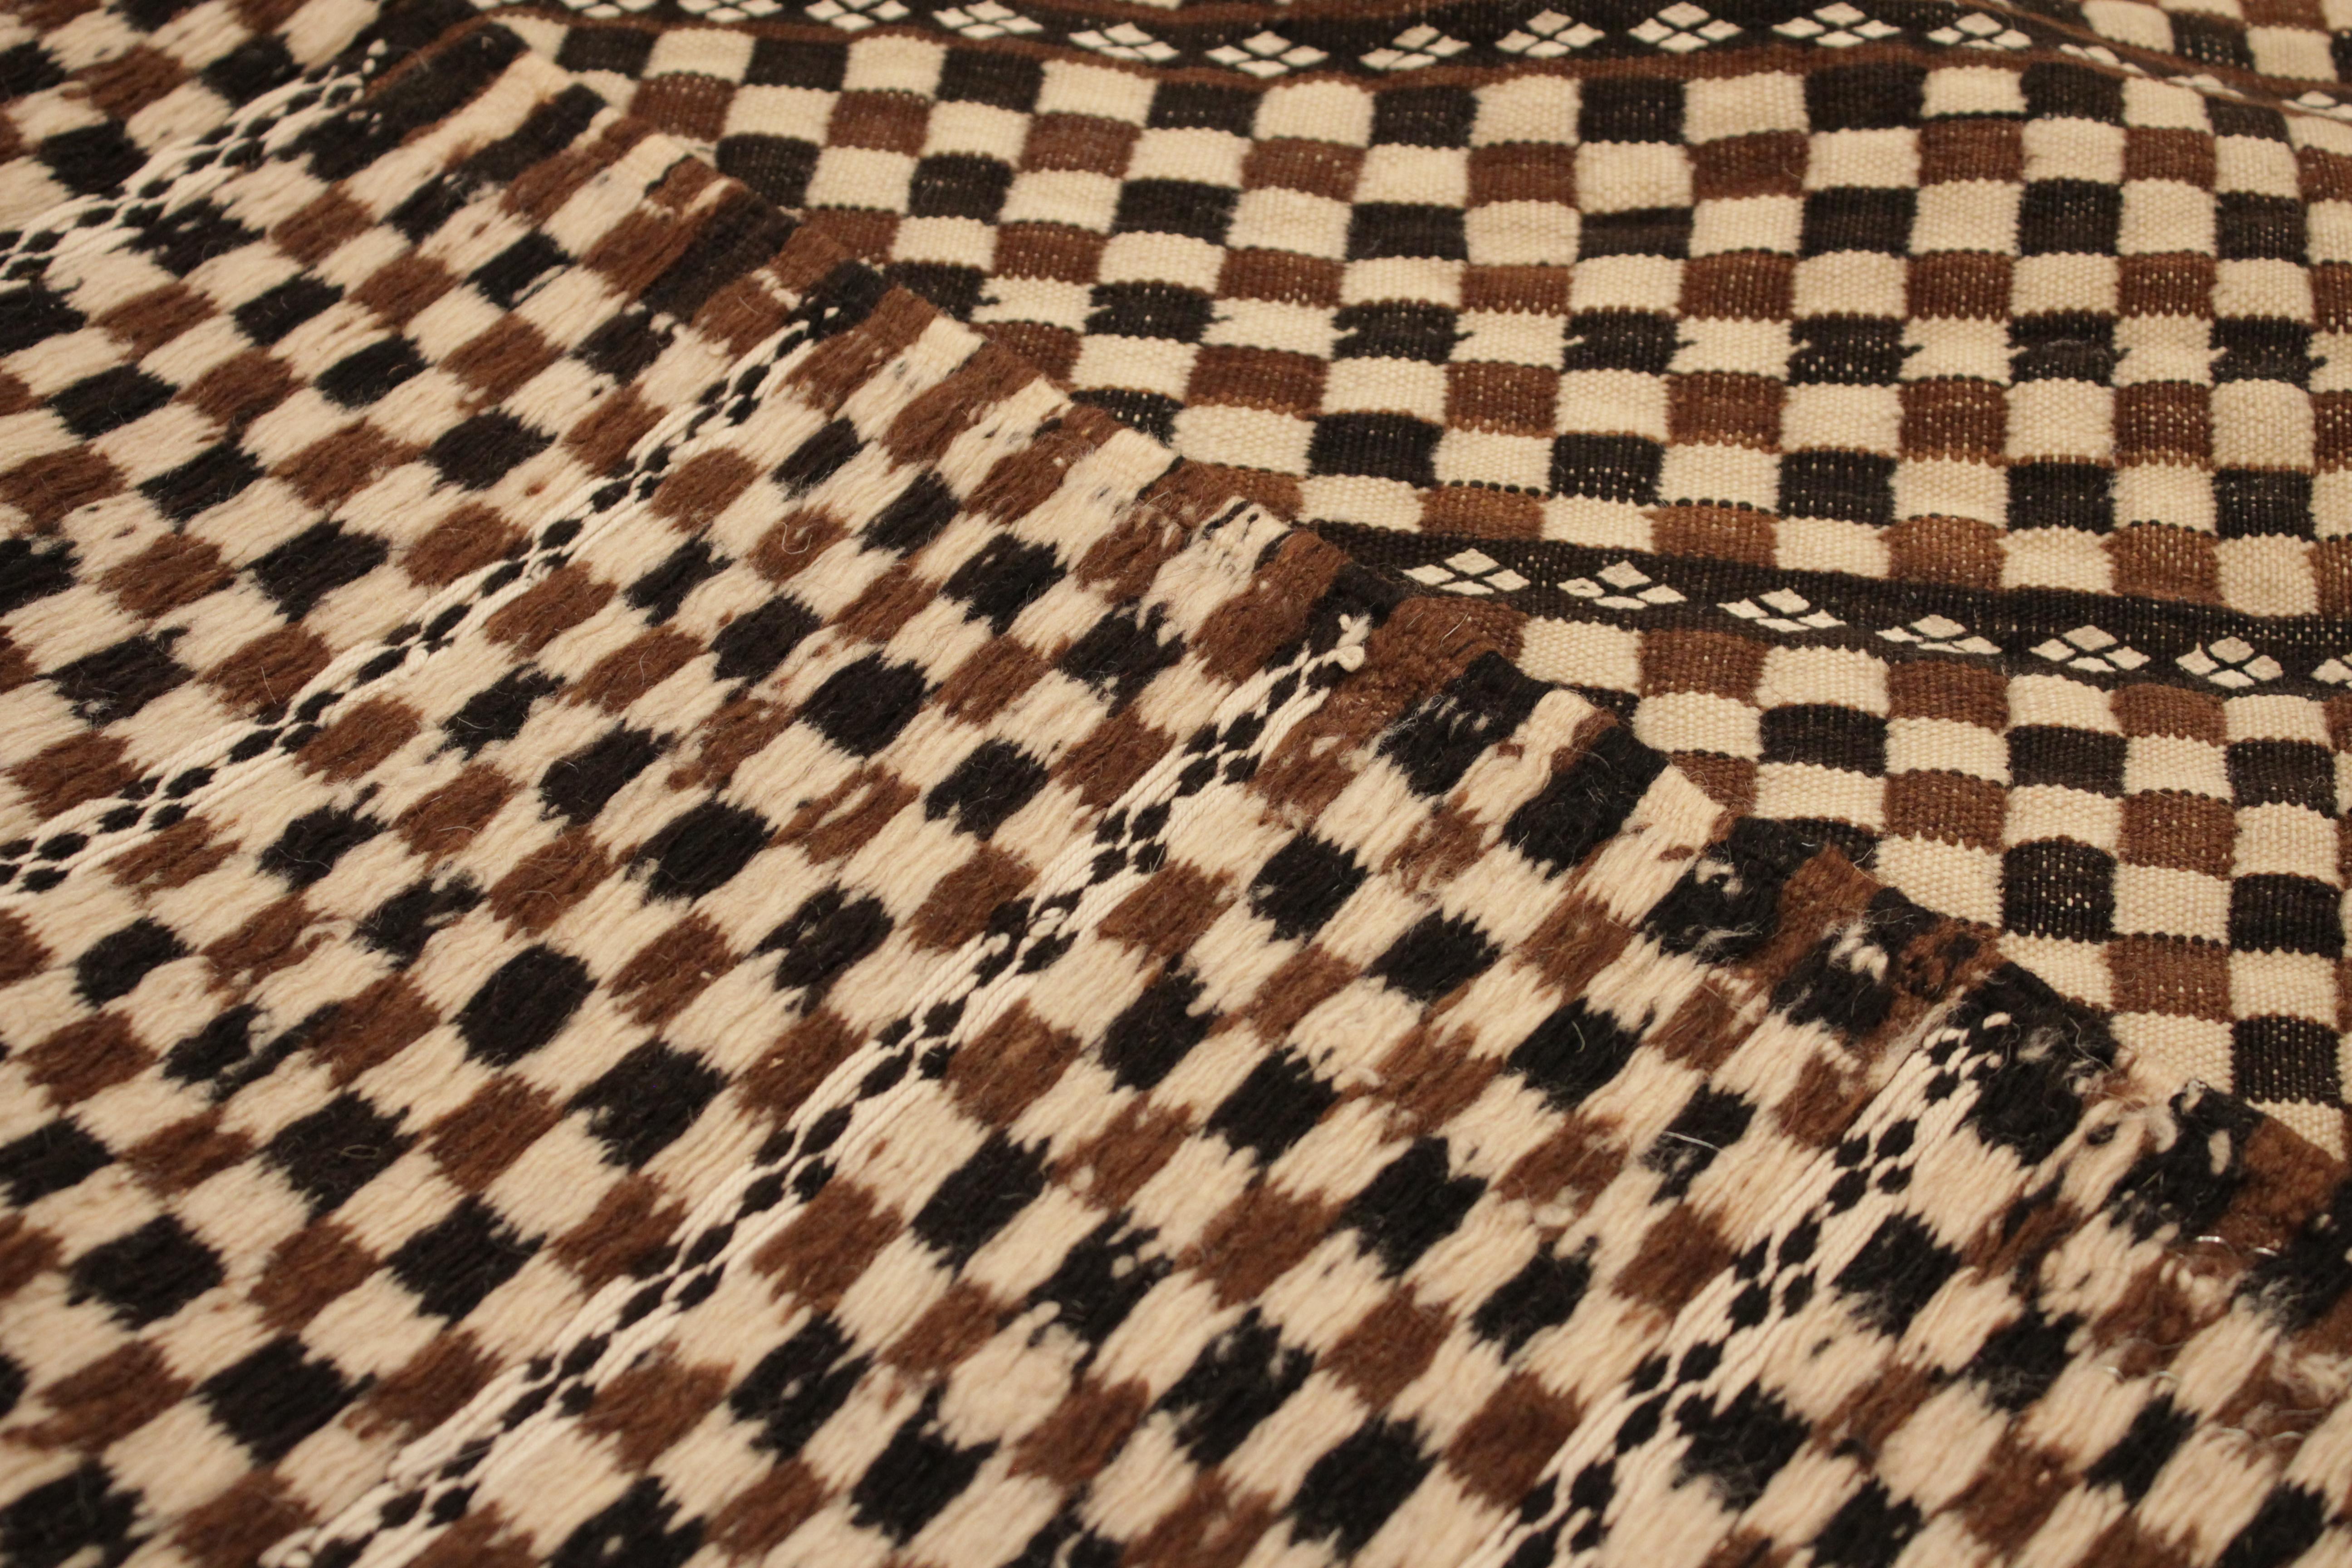 Fine Antique Moroccan Berber Checkerboard Design Flat-Woven Rug in Earth Tones  For Sale 1